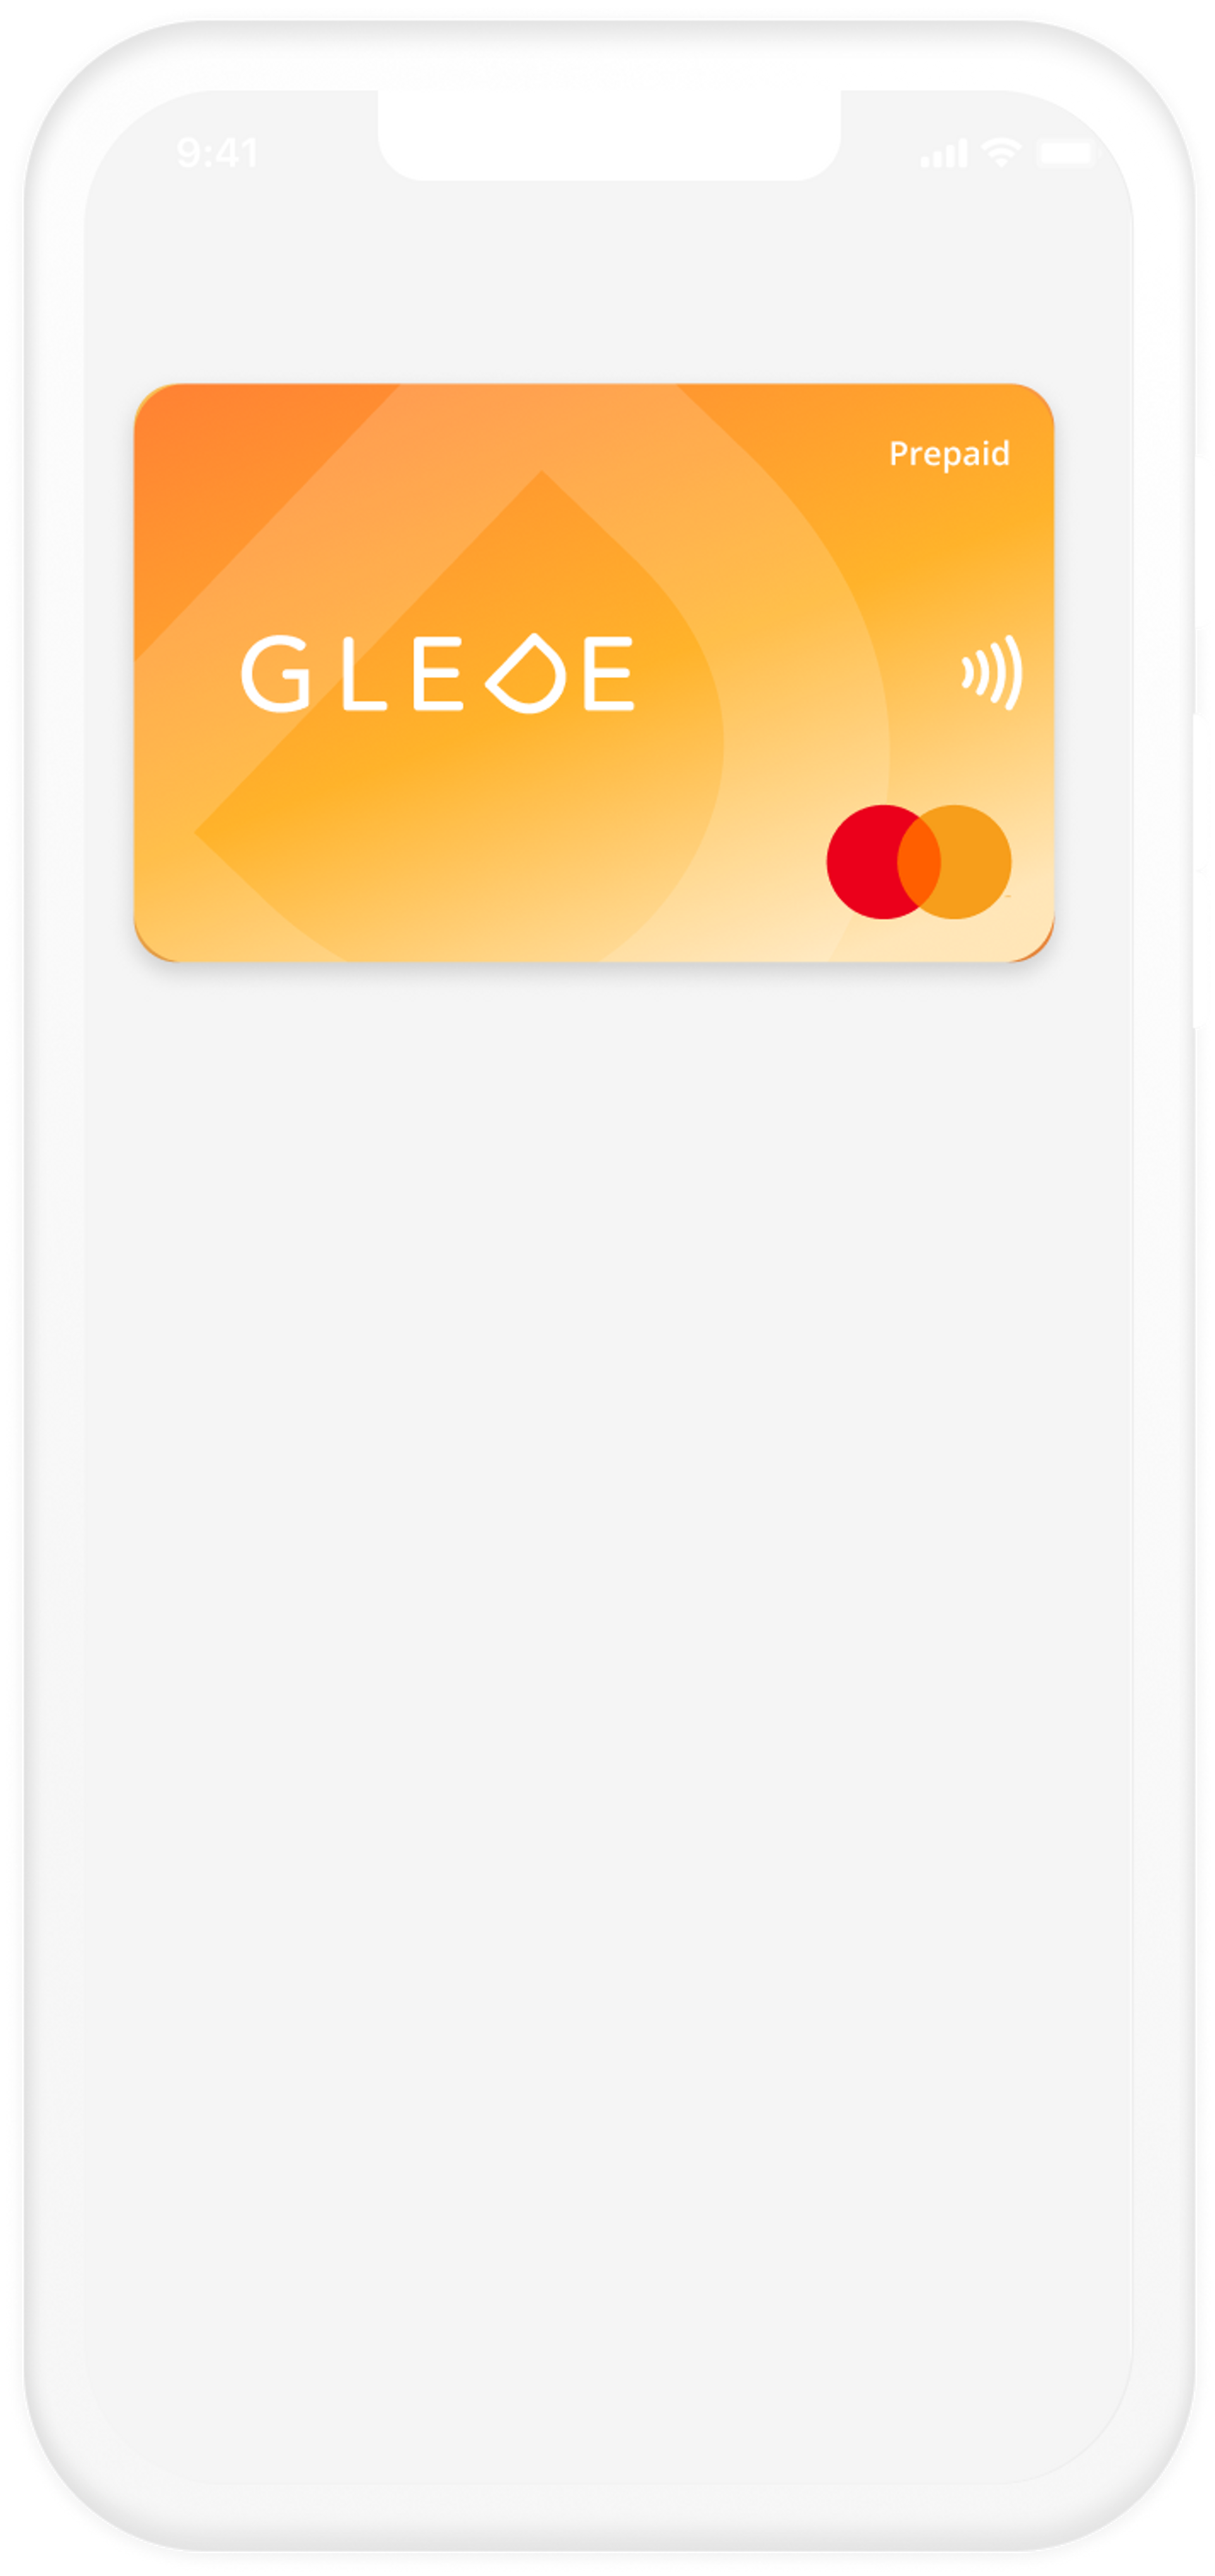 Glede Card on mobile screen